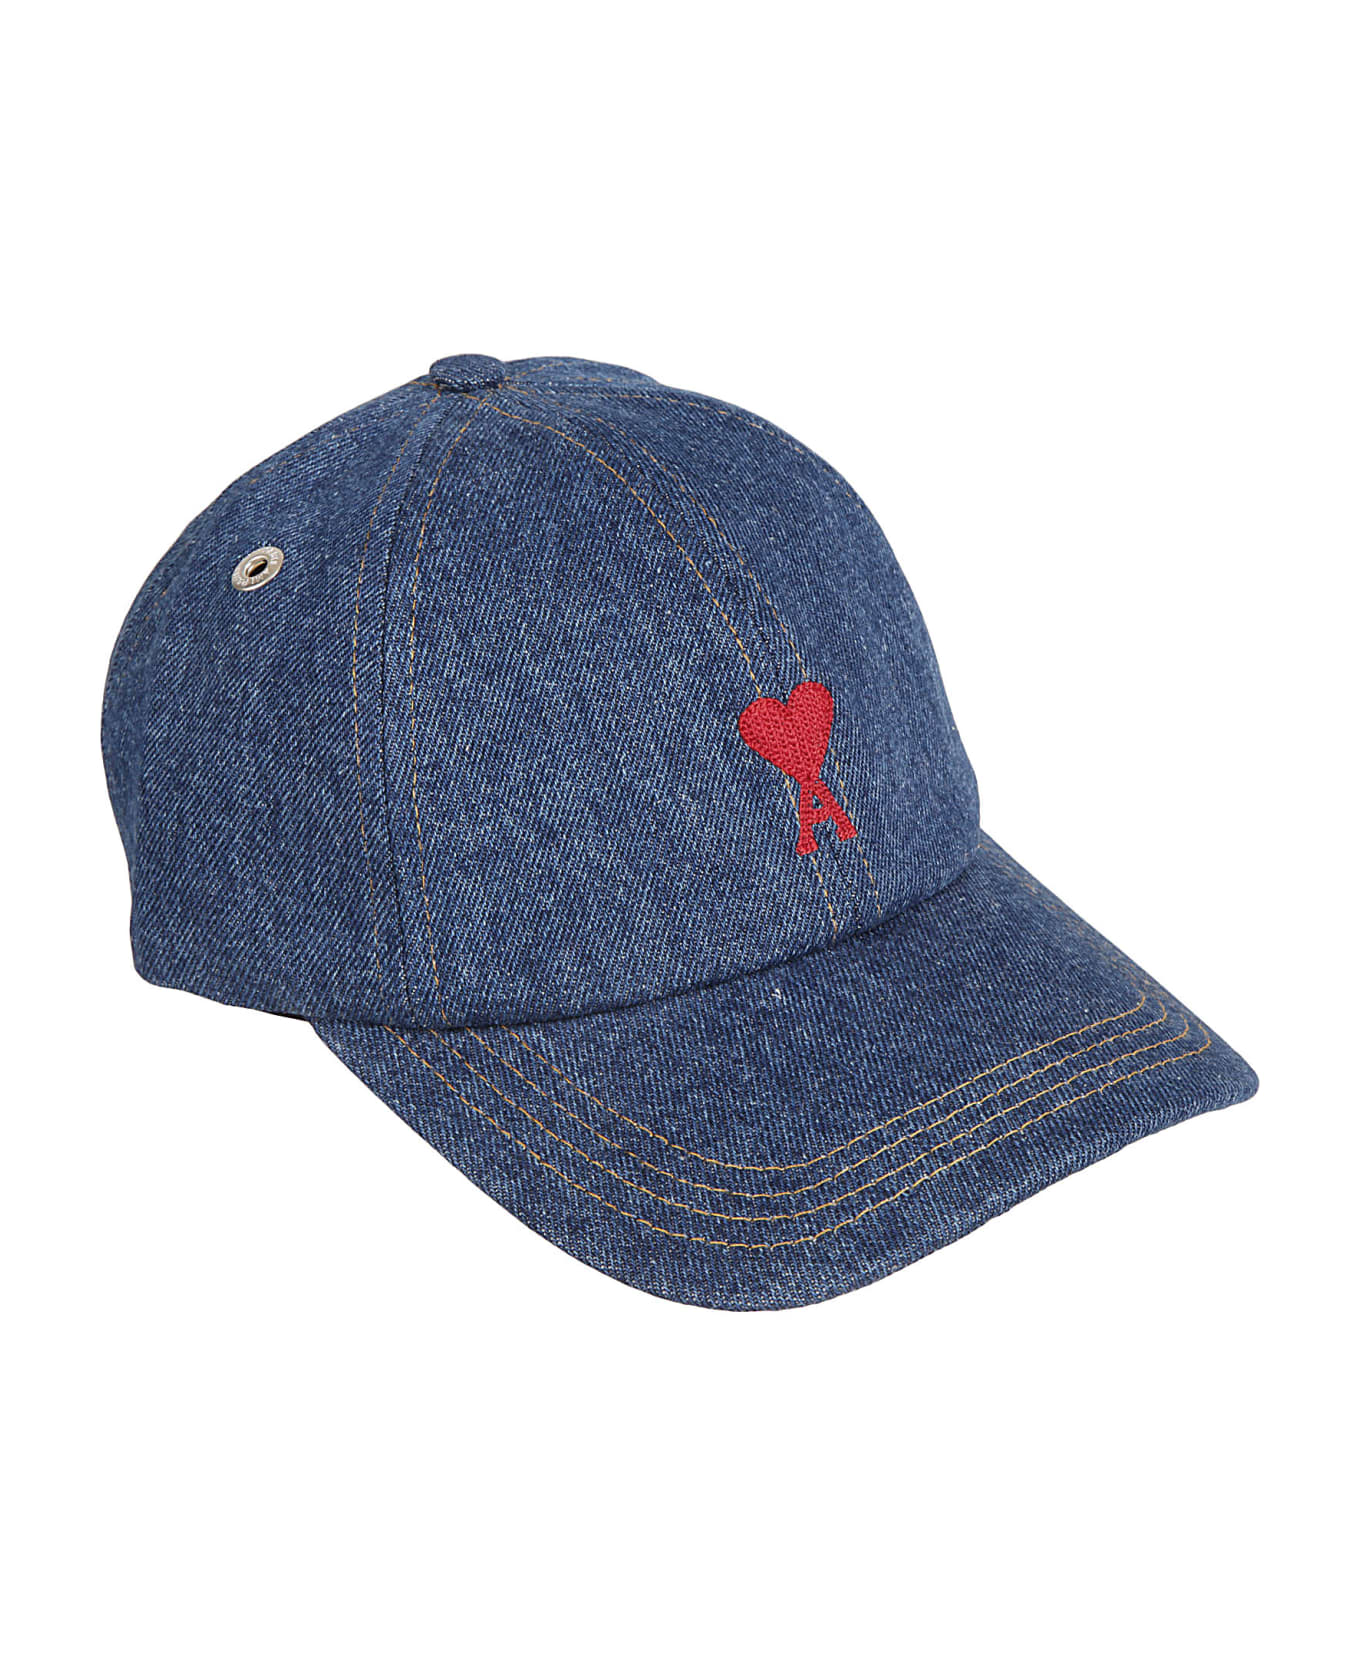 Ami Alexandre Mattiussi Adc Embroidery Cap - Used Blue 帽子